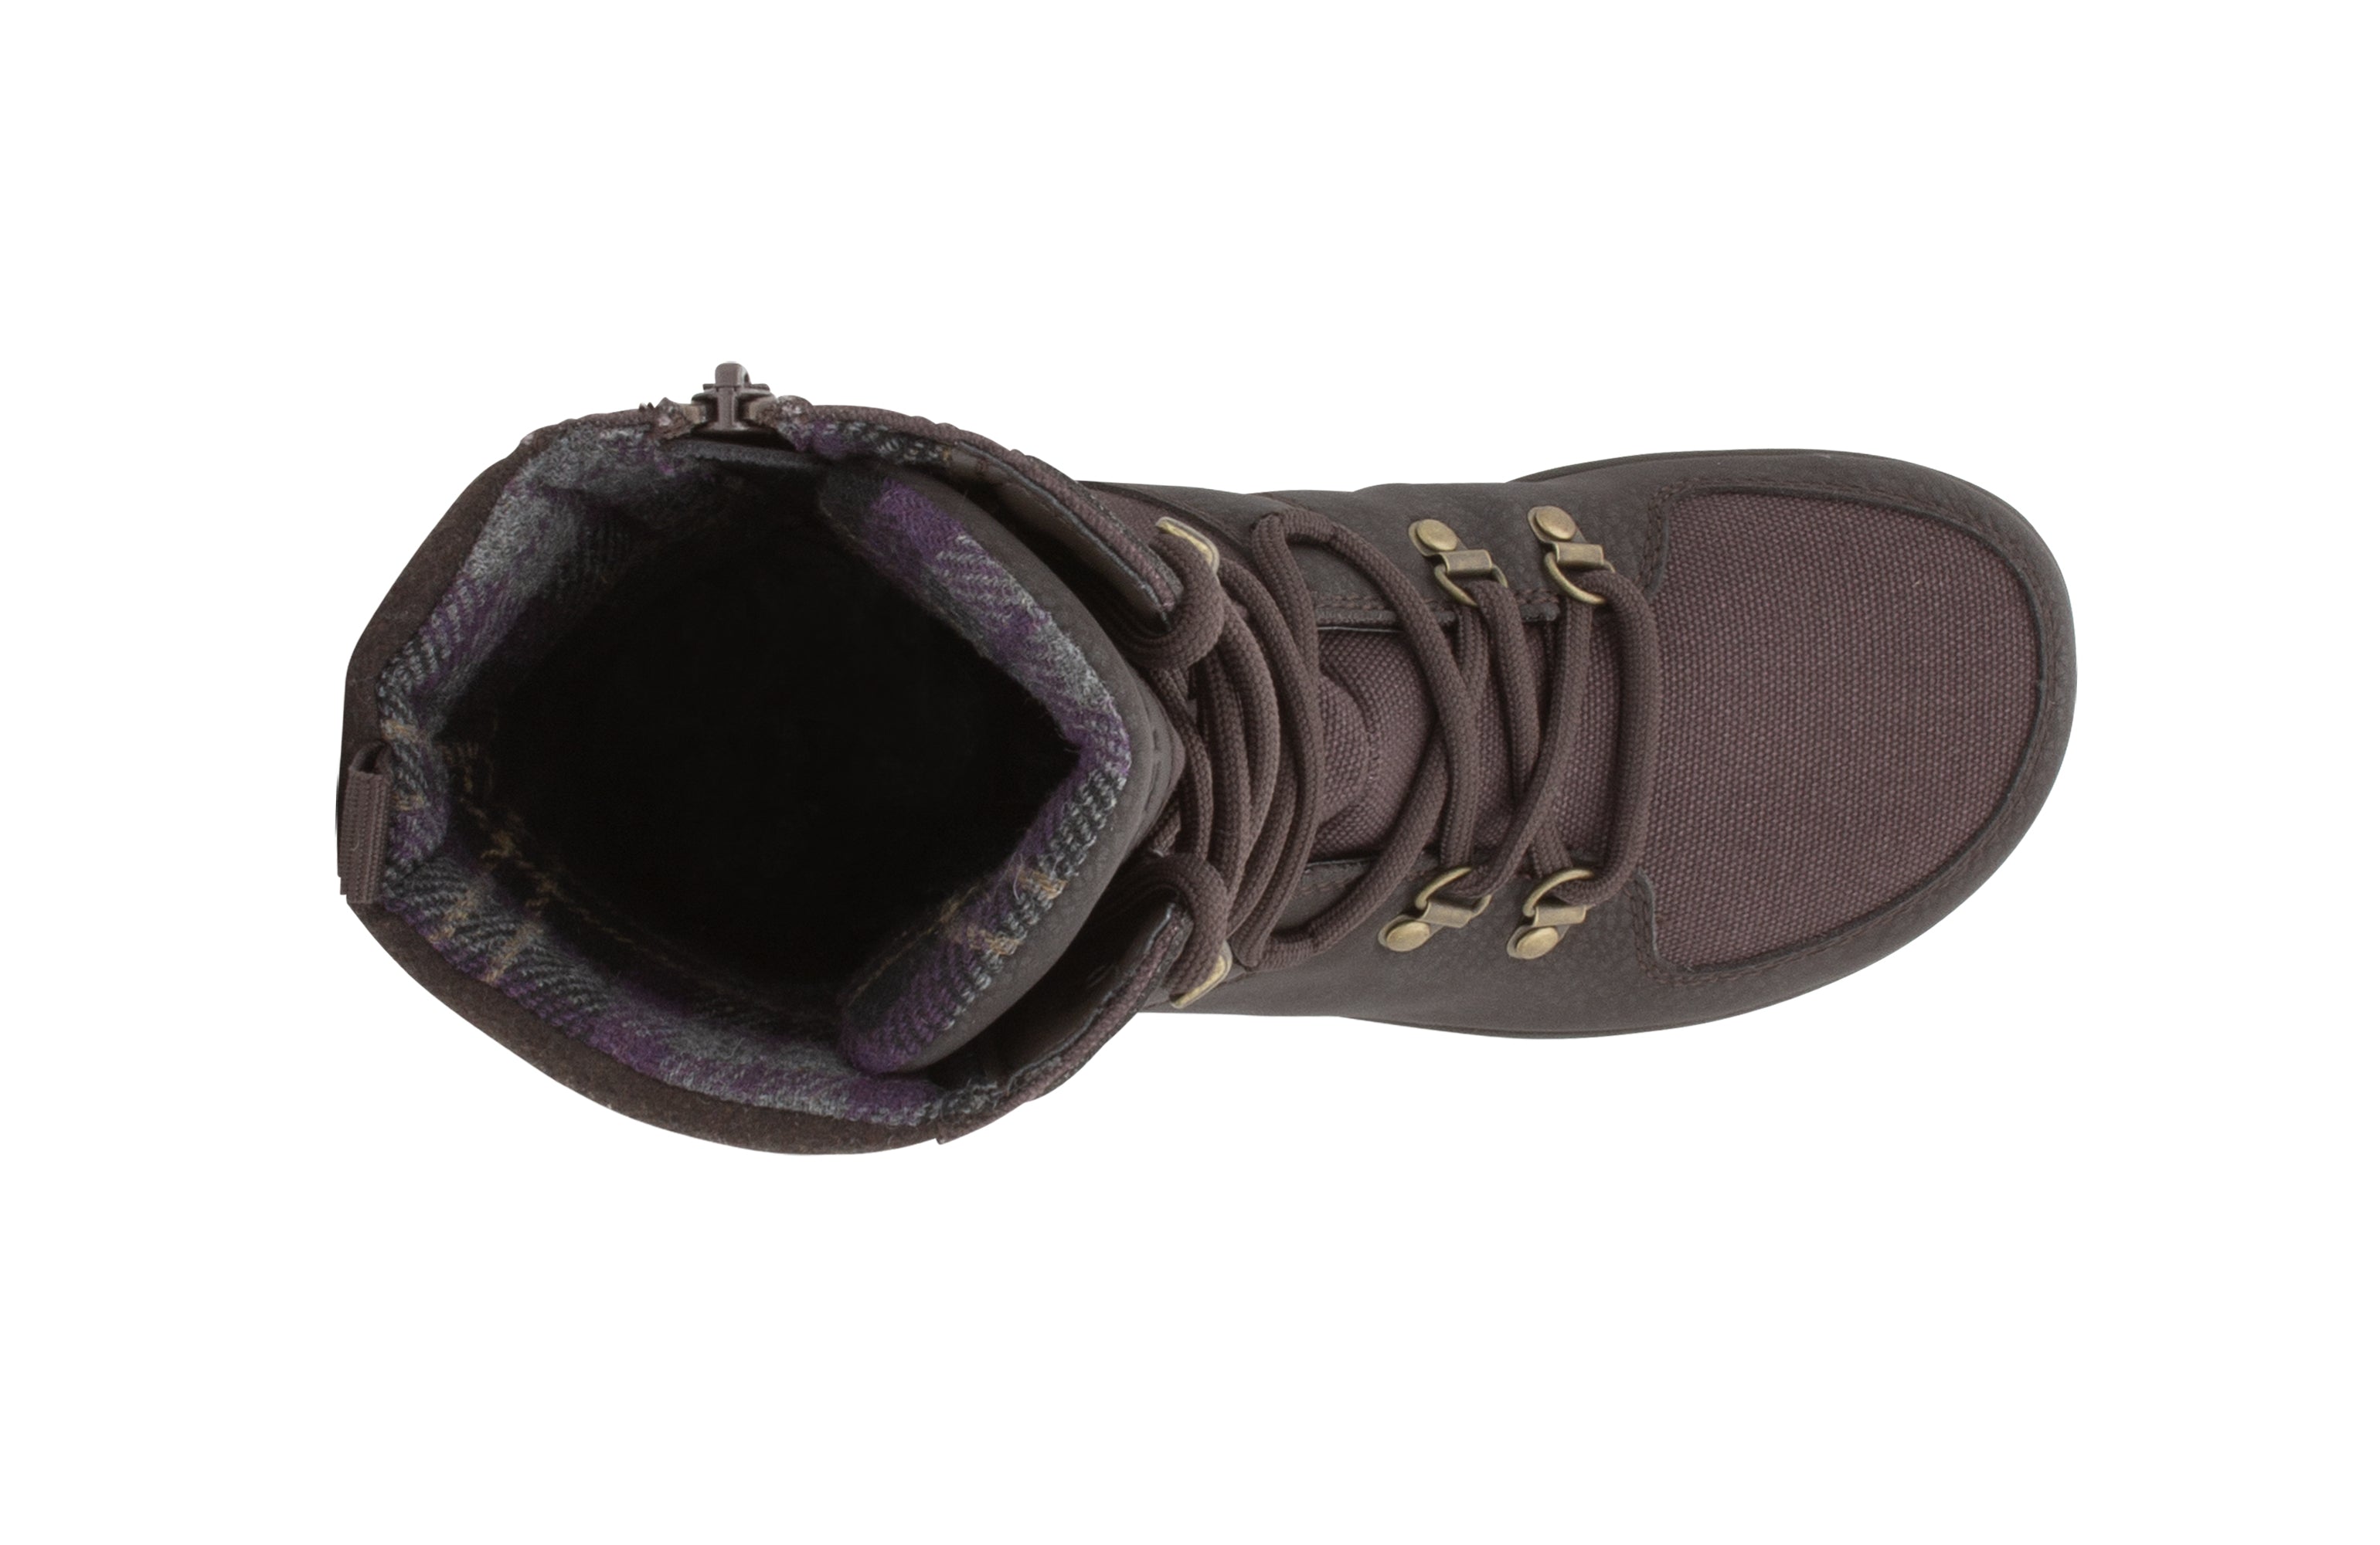 Xero Shoes Mika barfods vinterstøvler til kvinder i farven chocolate plum, top